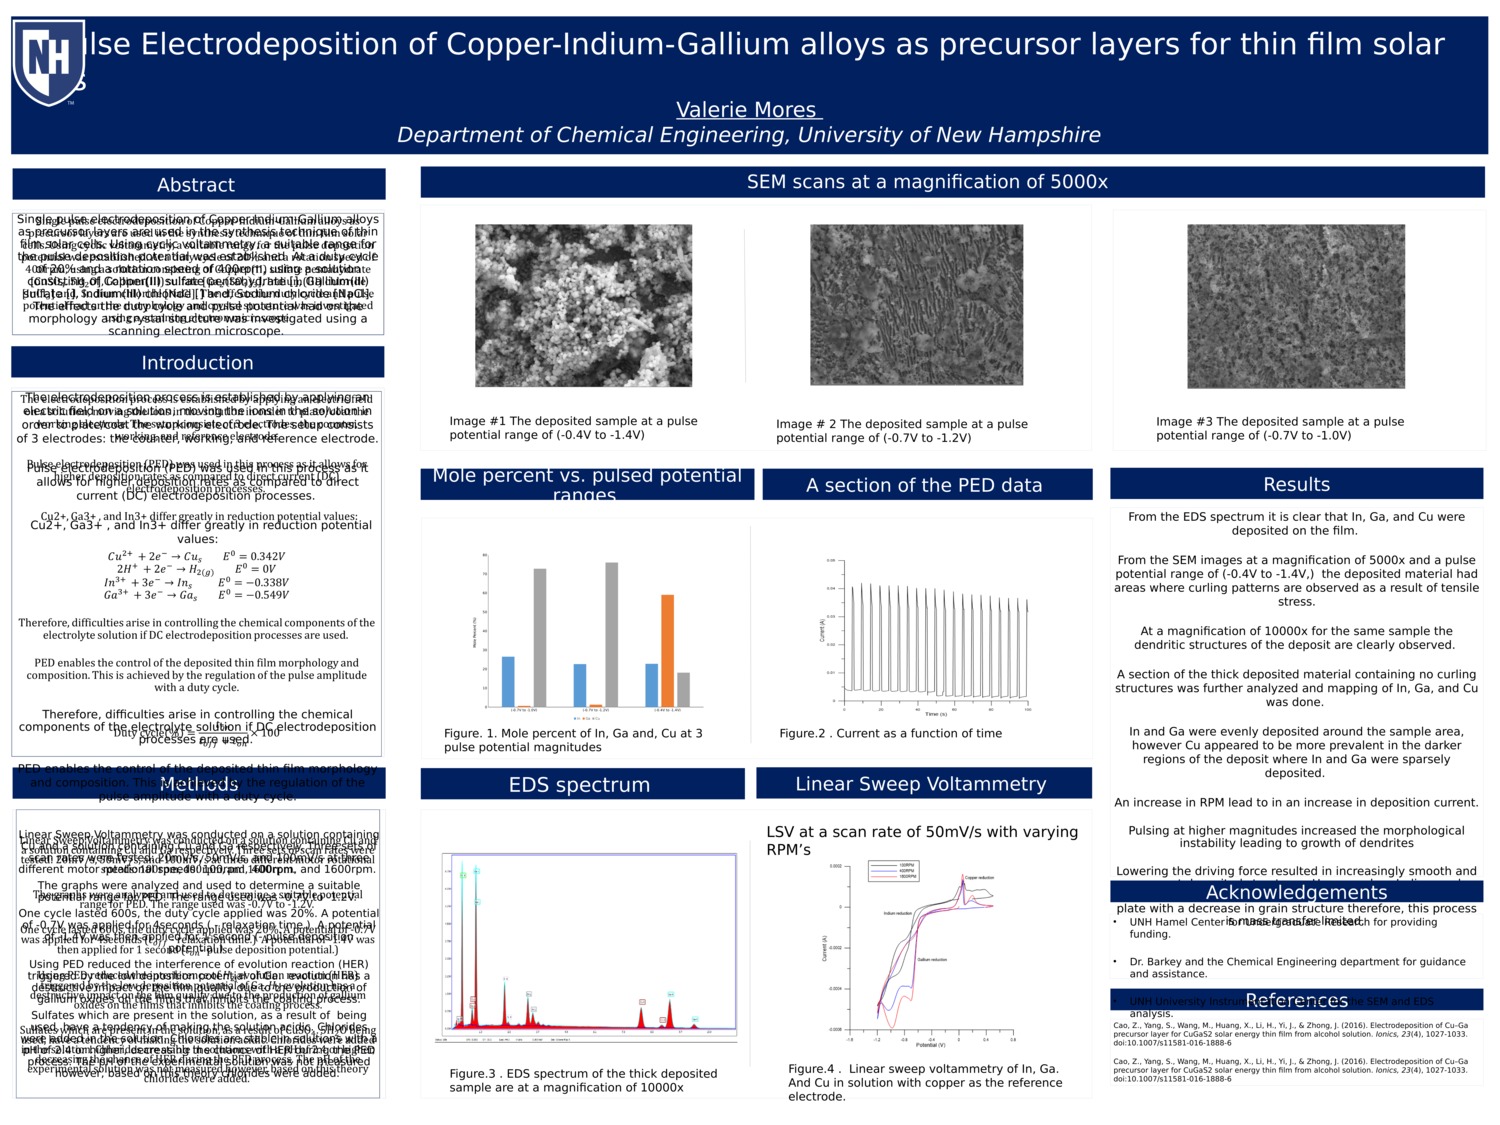 Pulse Electrodeposition Of Copper-Indium-Gallium Alloys As Precursor Layers For Thin Film Solar Cells  by vpm1002